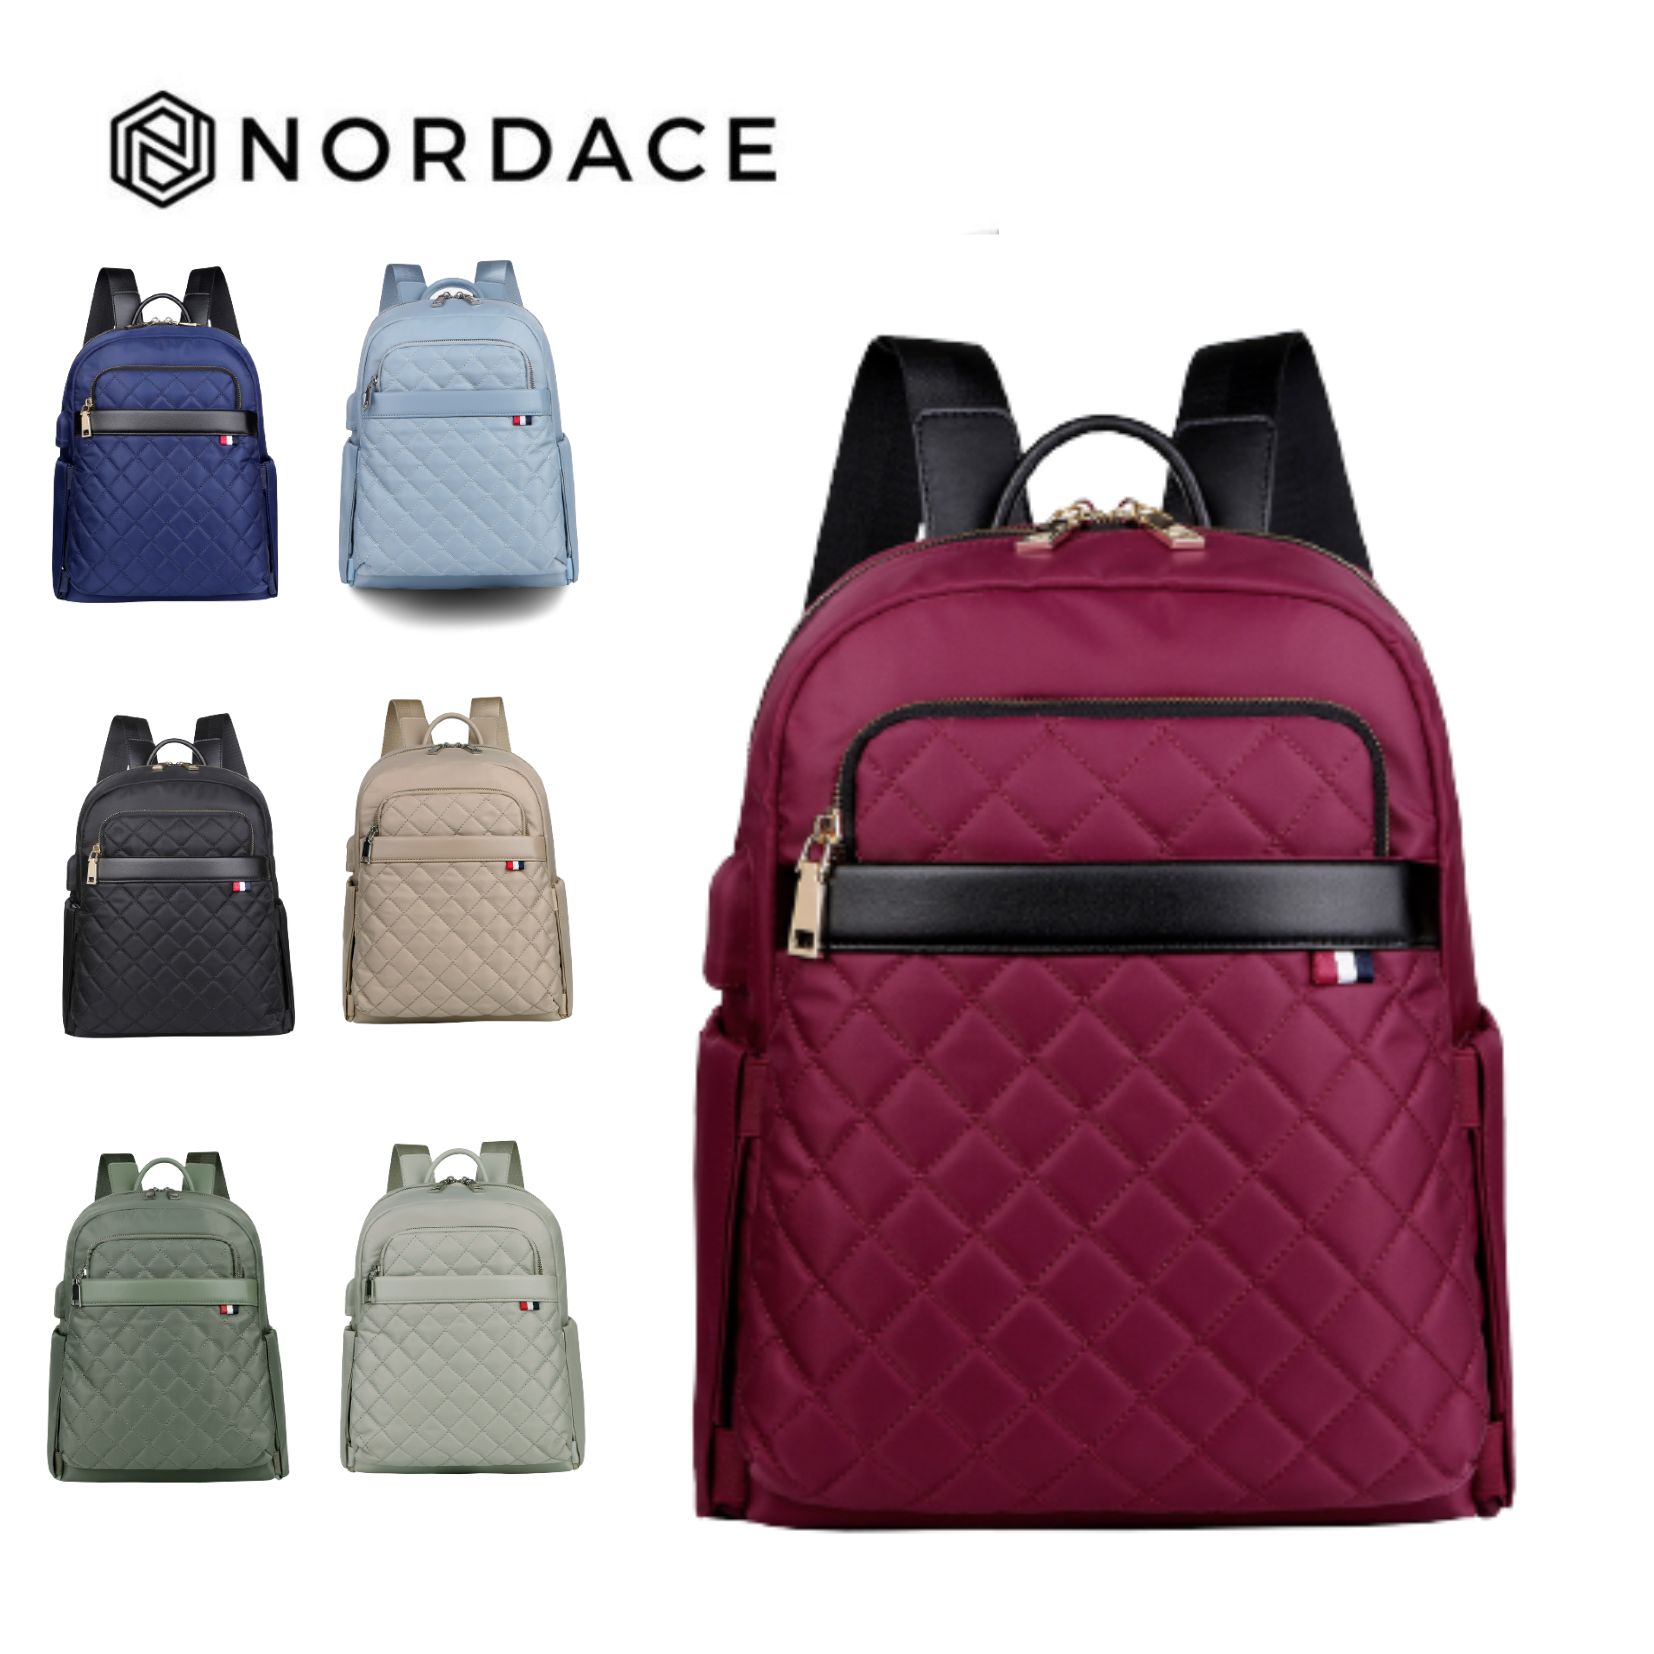 Nordace Ellie Mini- 後背包 充電雙肩包 雙肩包 筆電包 電腦包 旅行包 休閒包 防水背包 7色可選-酒紅色